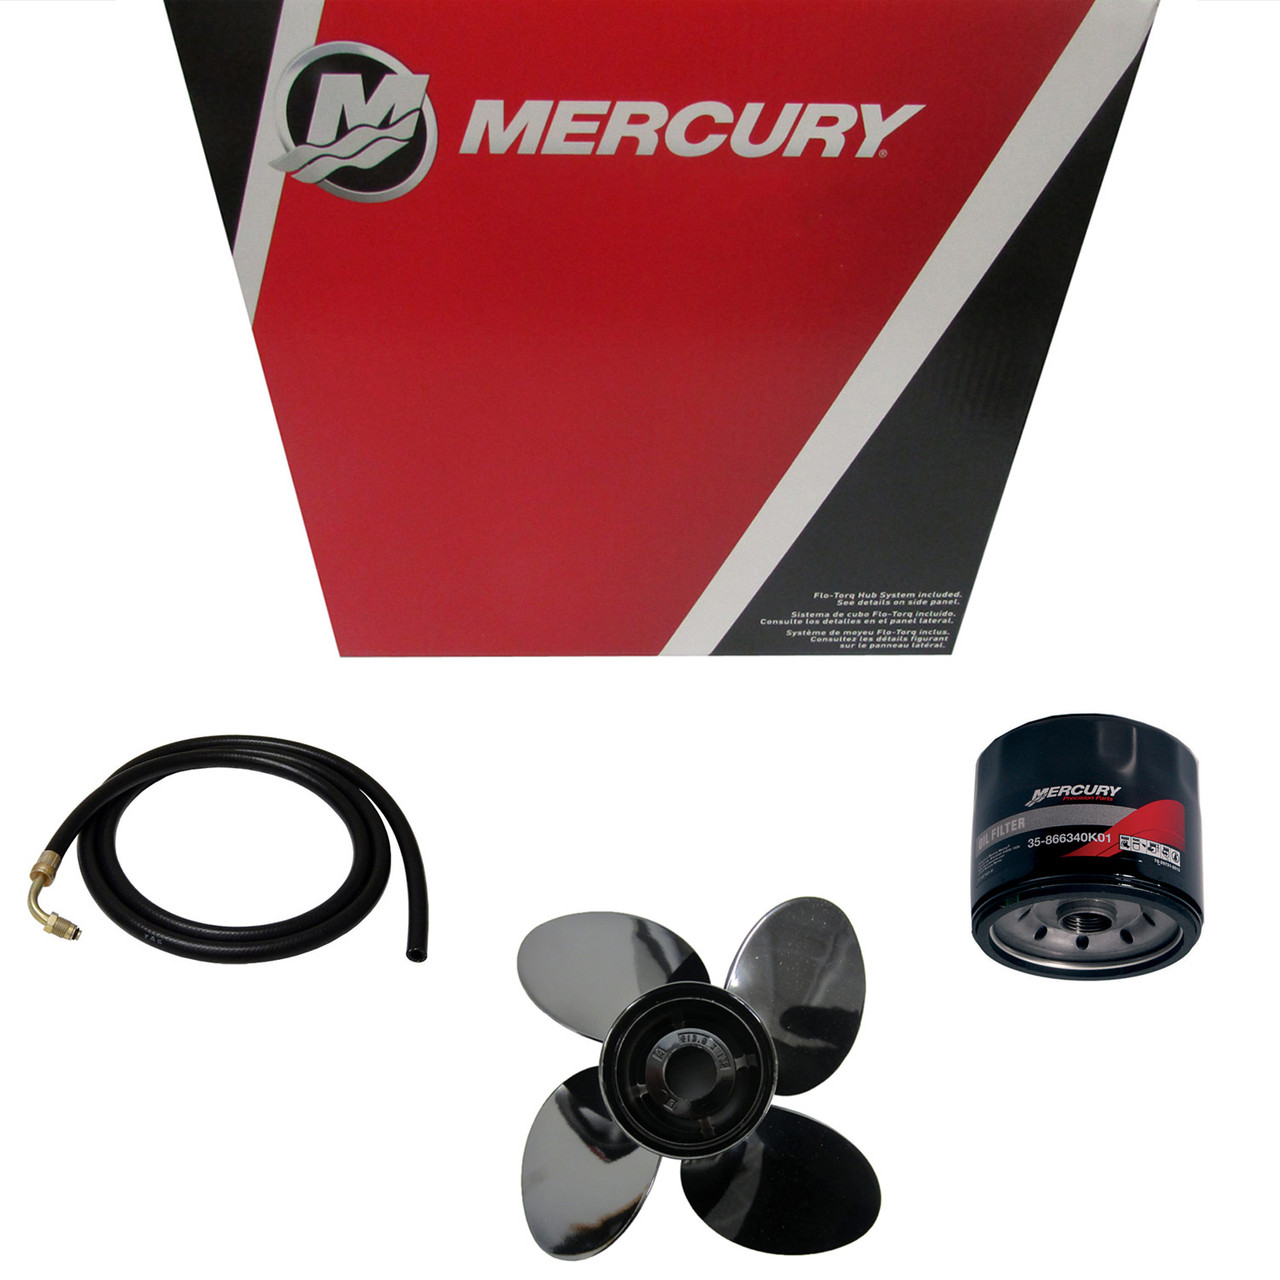 Mercury Marine / Mercruiser New OEM Blkmax 8.7 X 5 Rh, 48-812954A10